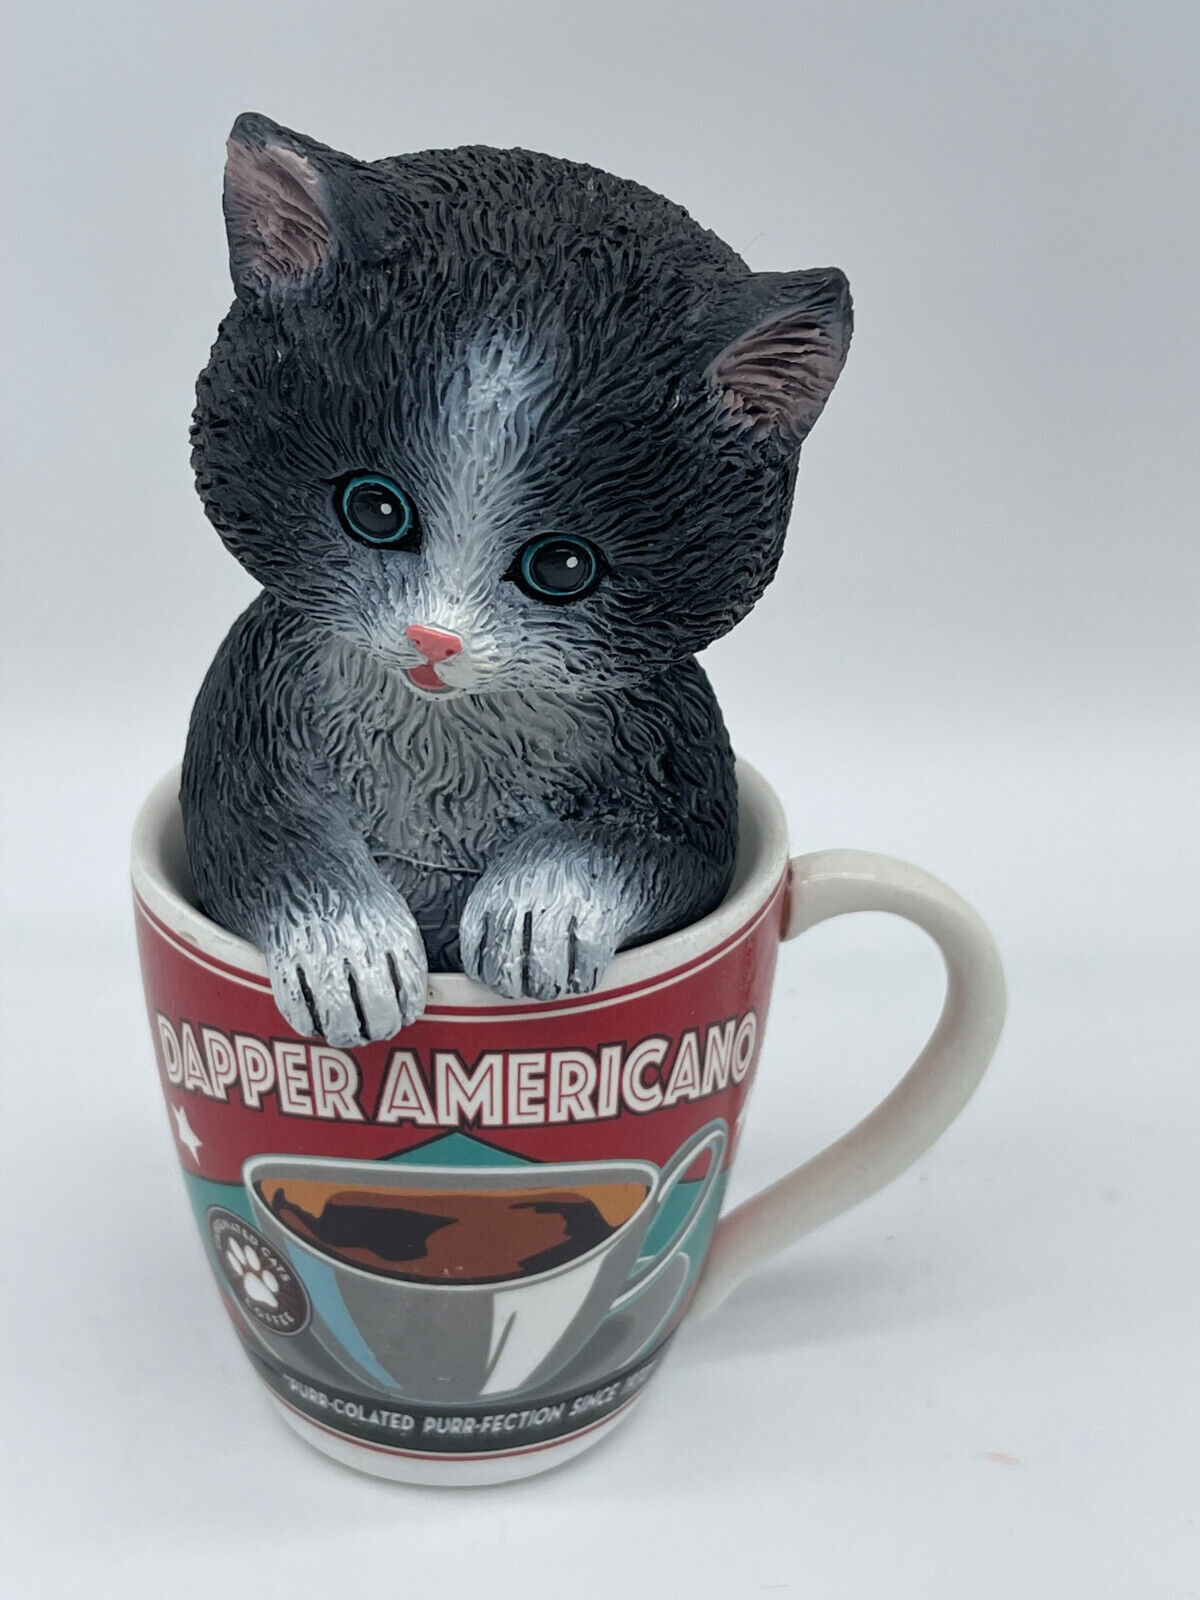 Hamilton Collection Kayomi Harai Coffee Cats Dapper Americano Resin Figurine